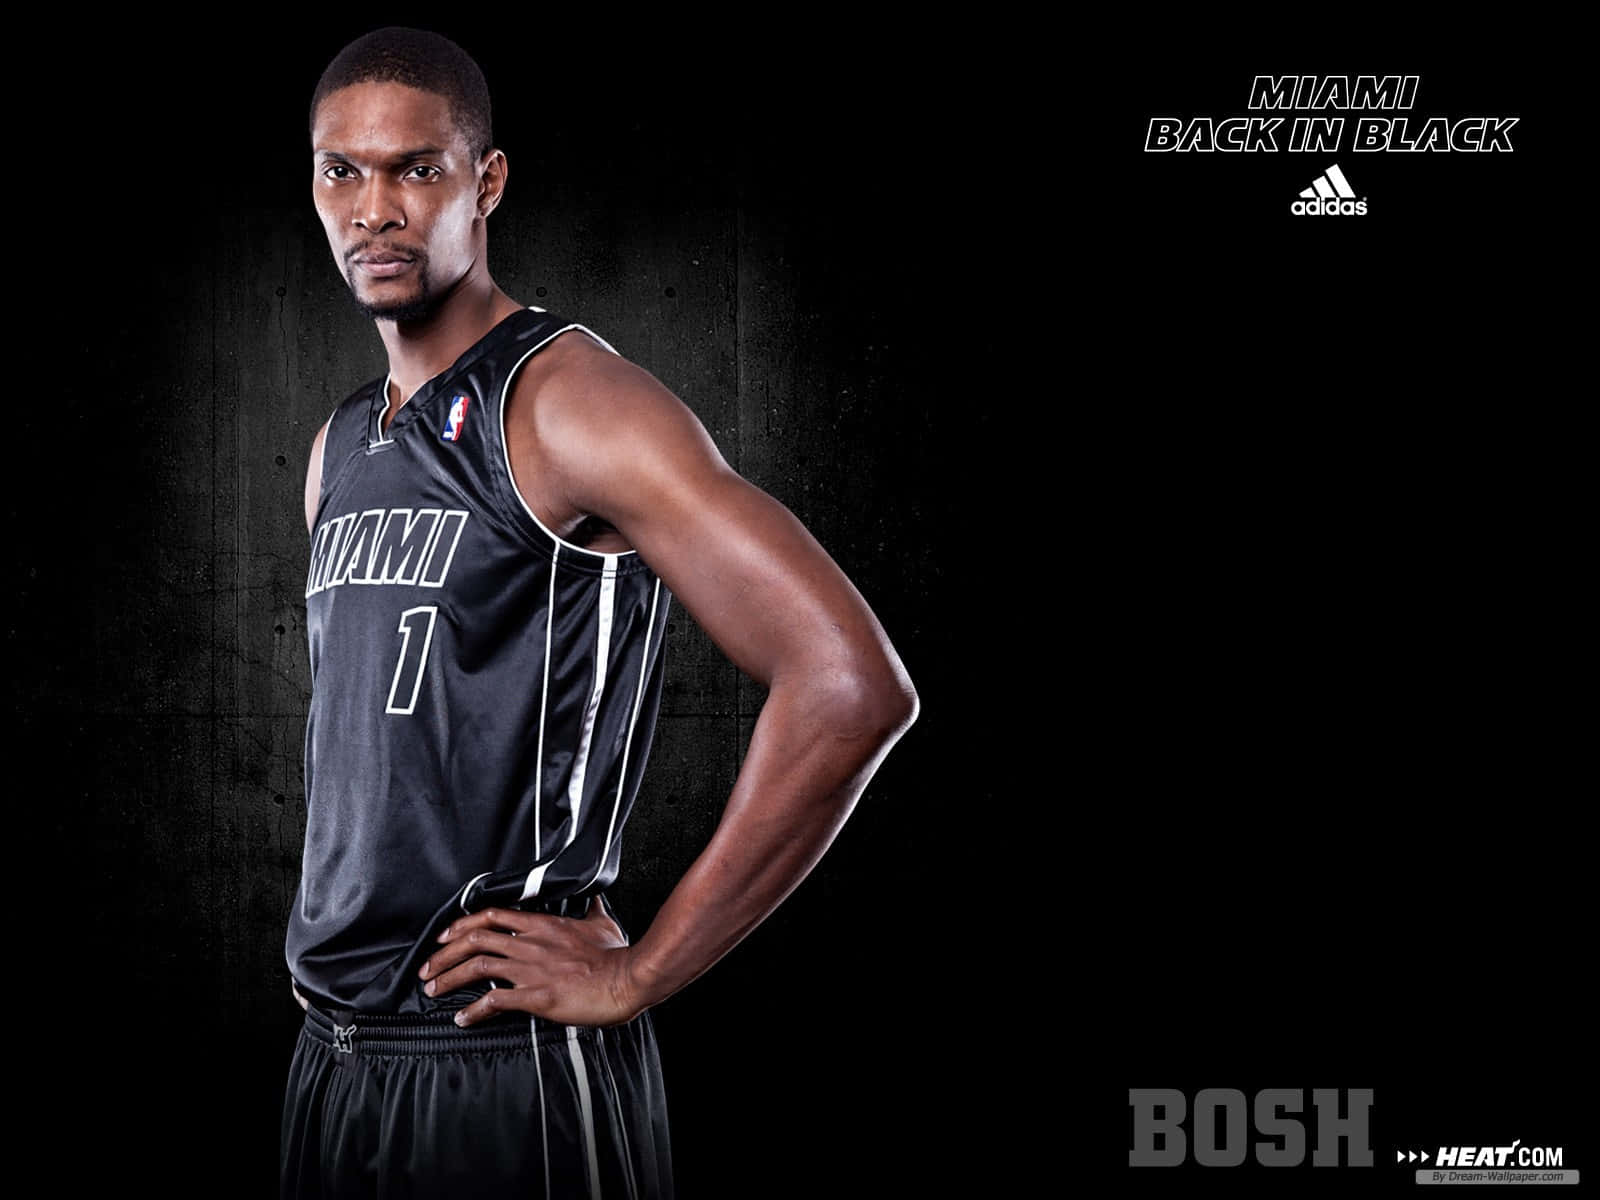 Chris Bosh Miami Heat Back In Black Promotional Poster Wallpaper